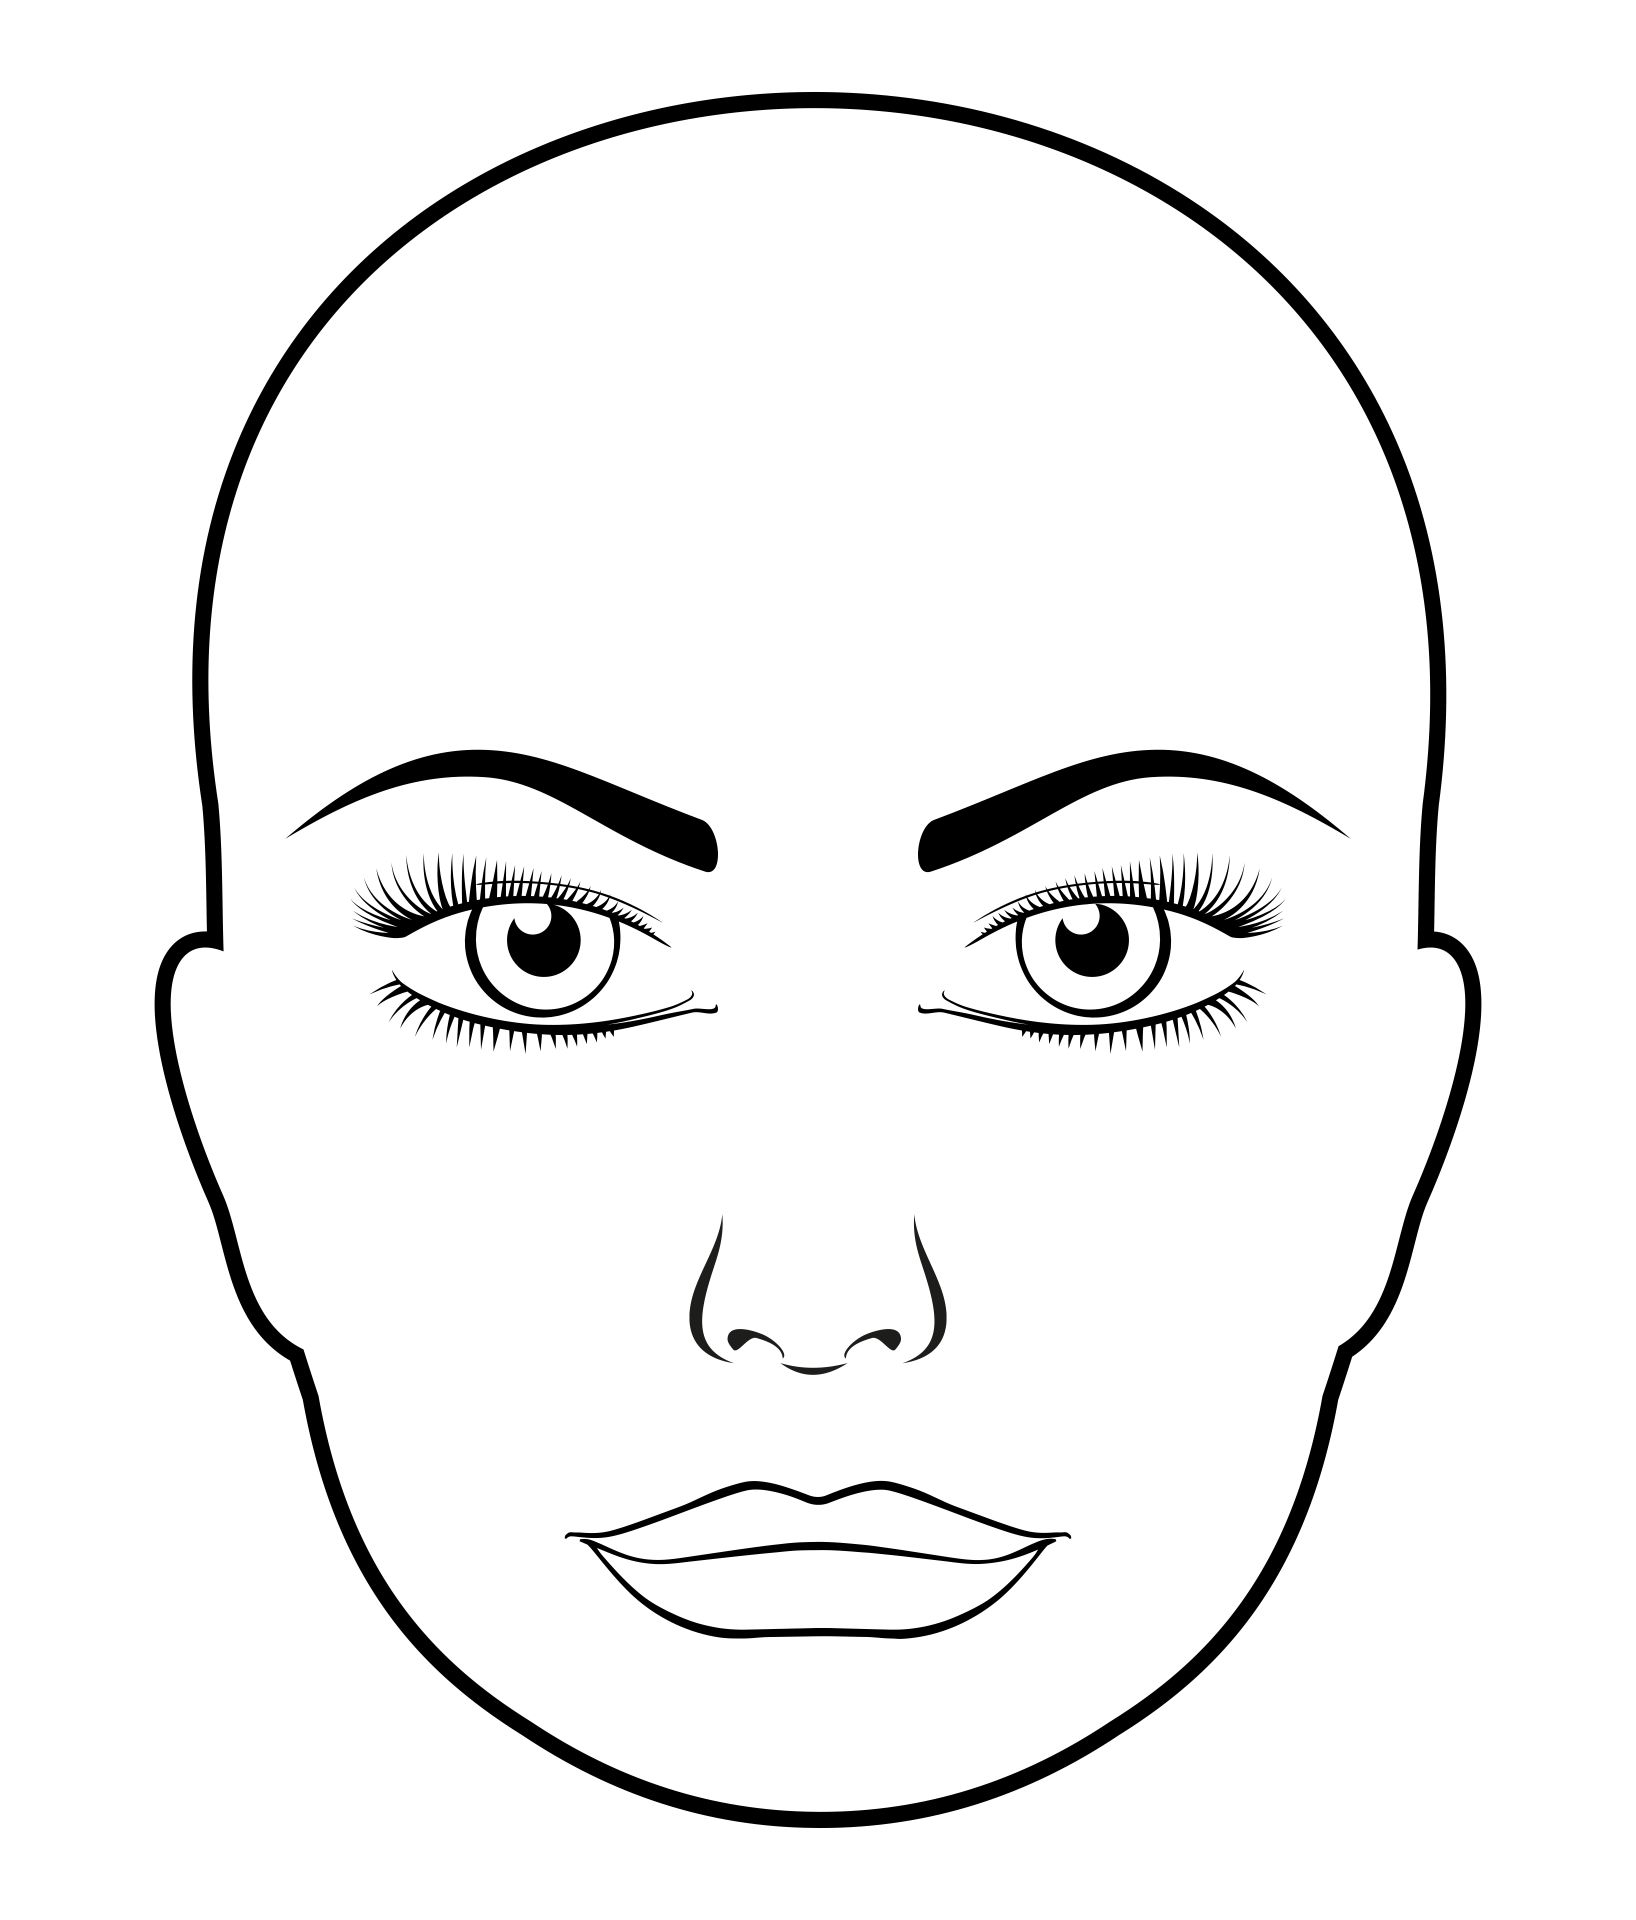 Blank Makeup Face Chart